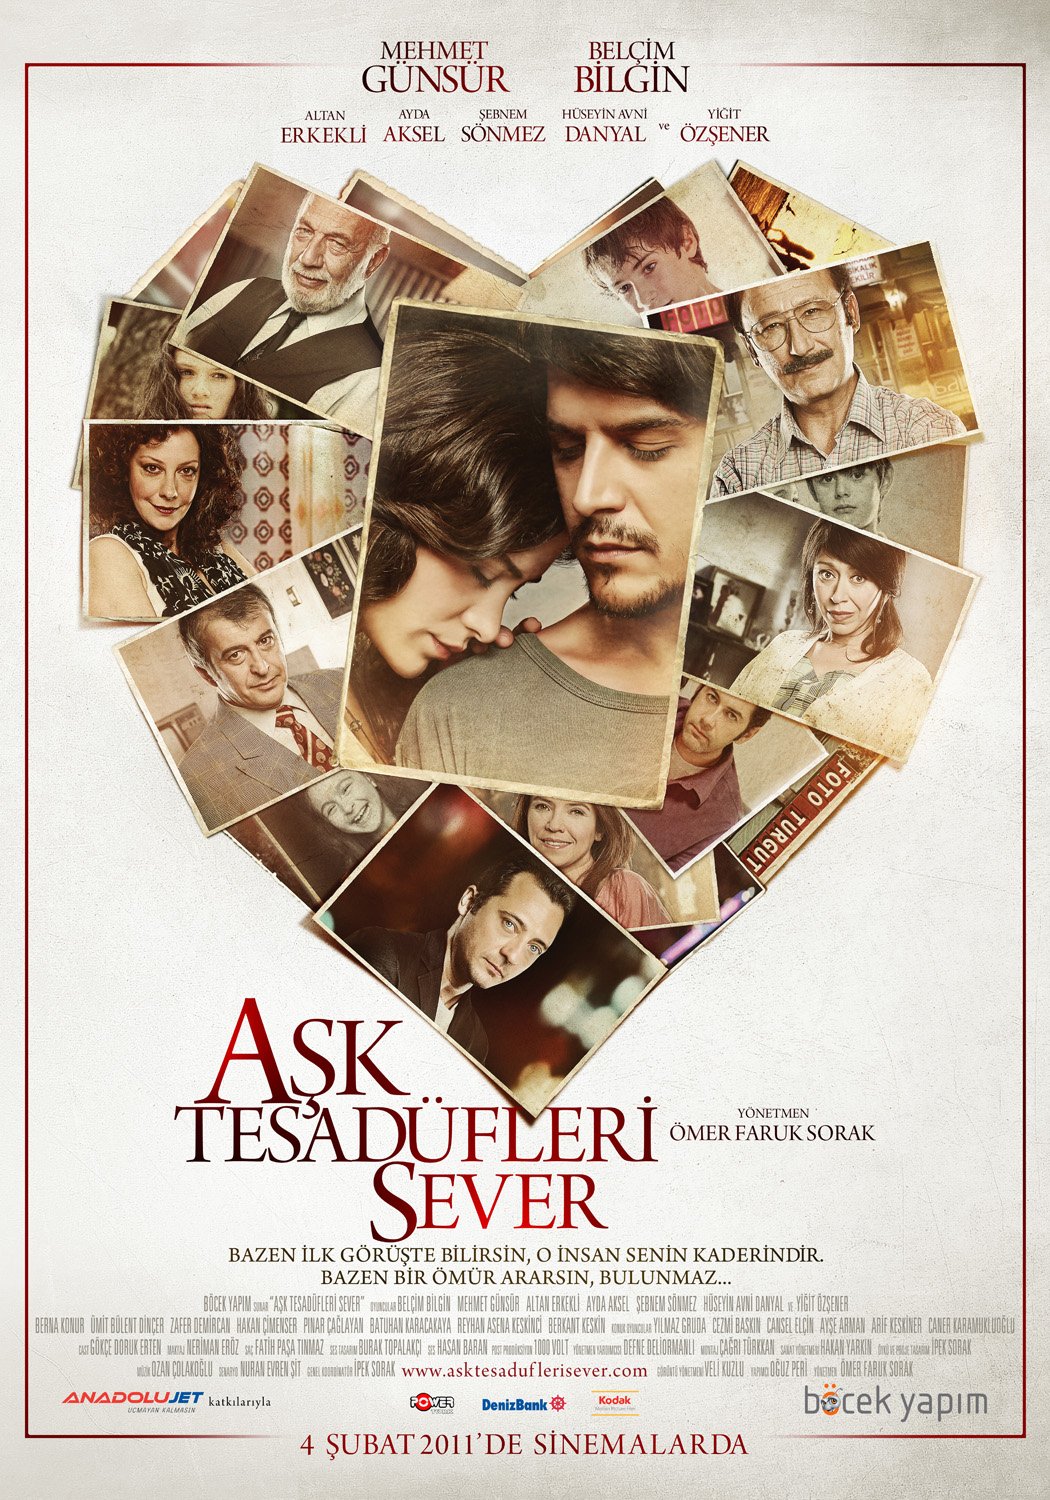 Extra Large Movie Poster Image for Ask Tesadüfleri Sever (#3 of 4)